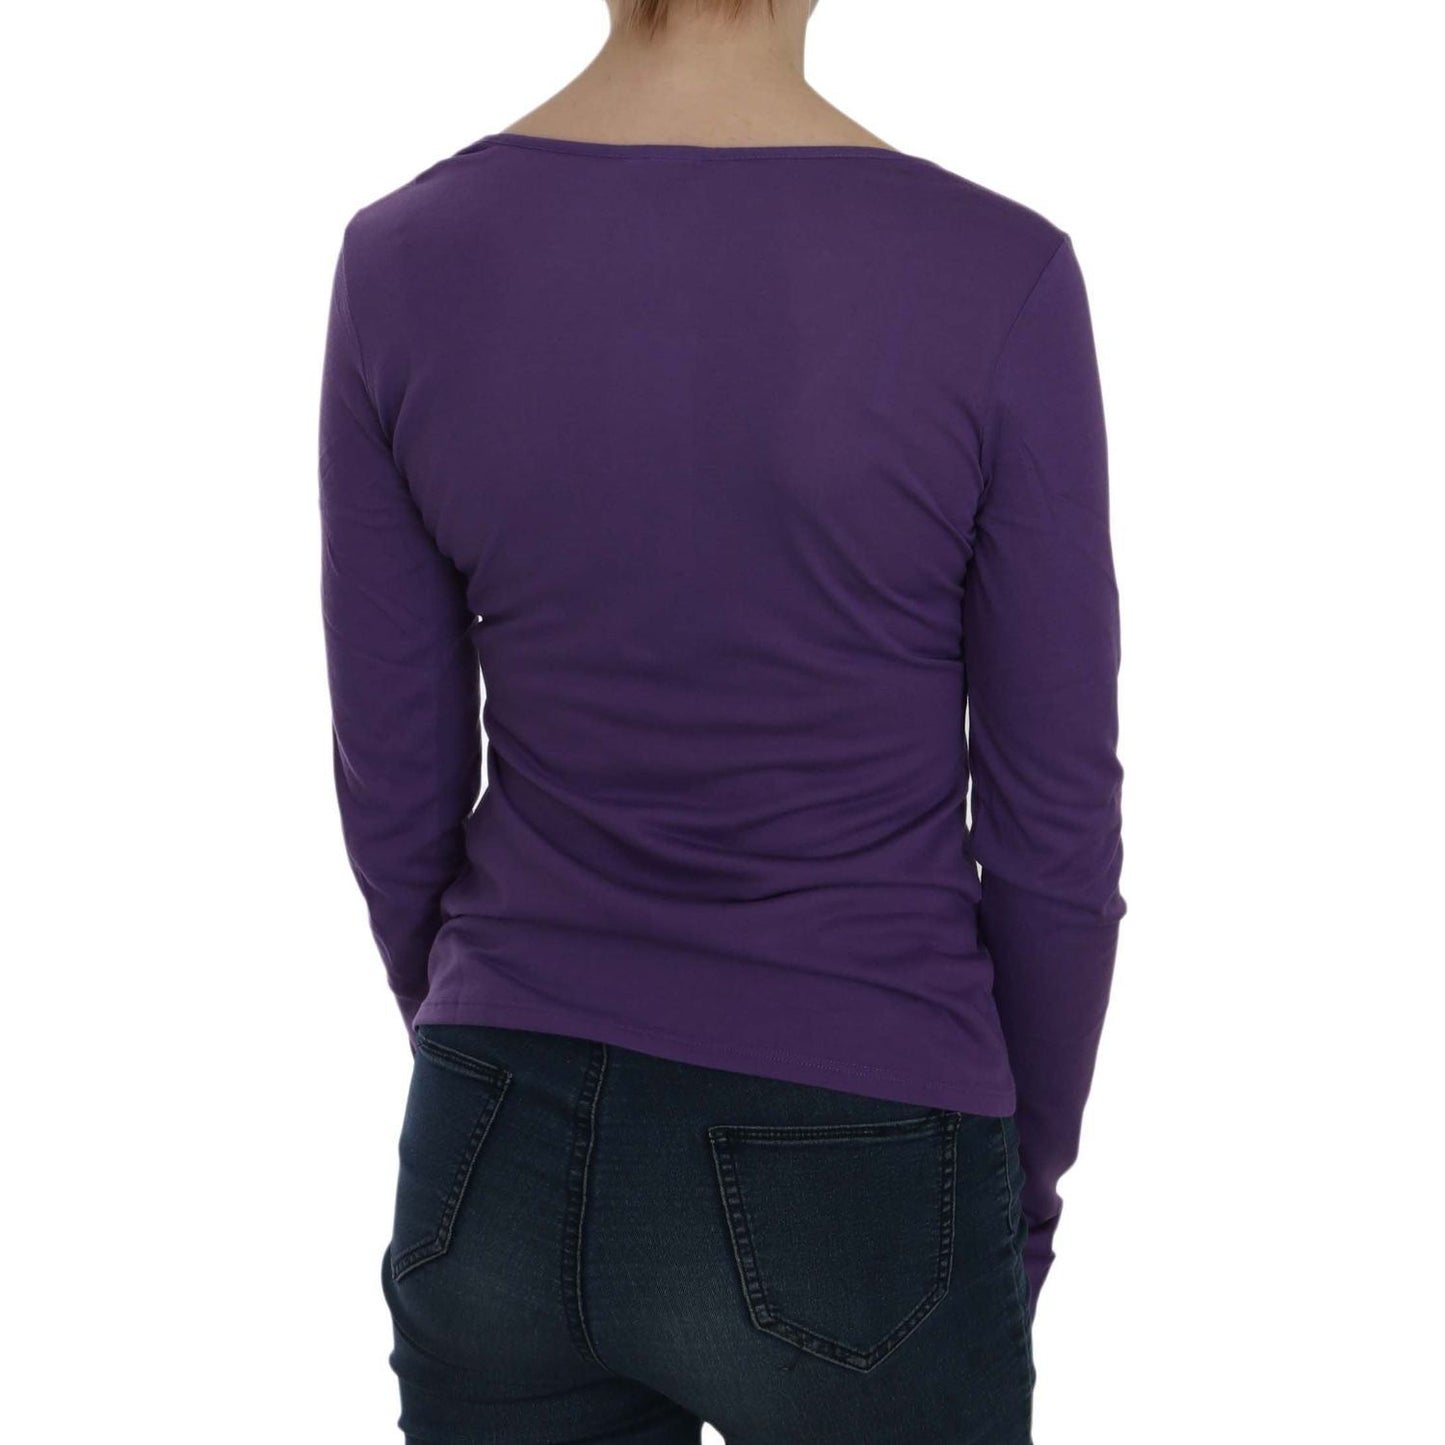 Exte Crystal Embellished U-Neck Blouse purple-crystal-embellished-long-sleeve-casual-top